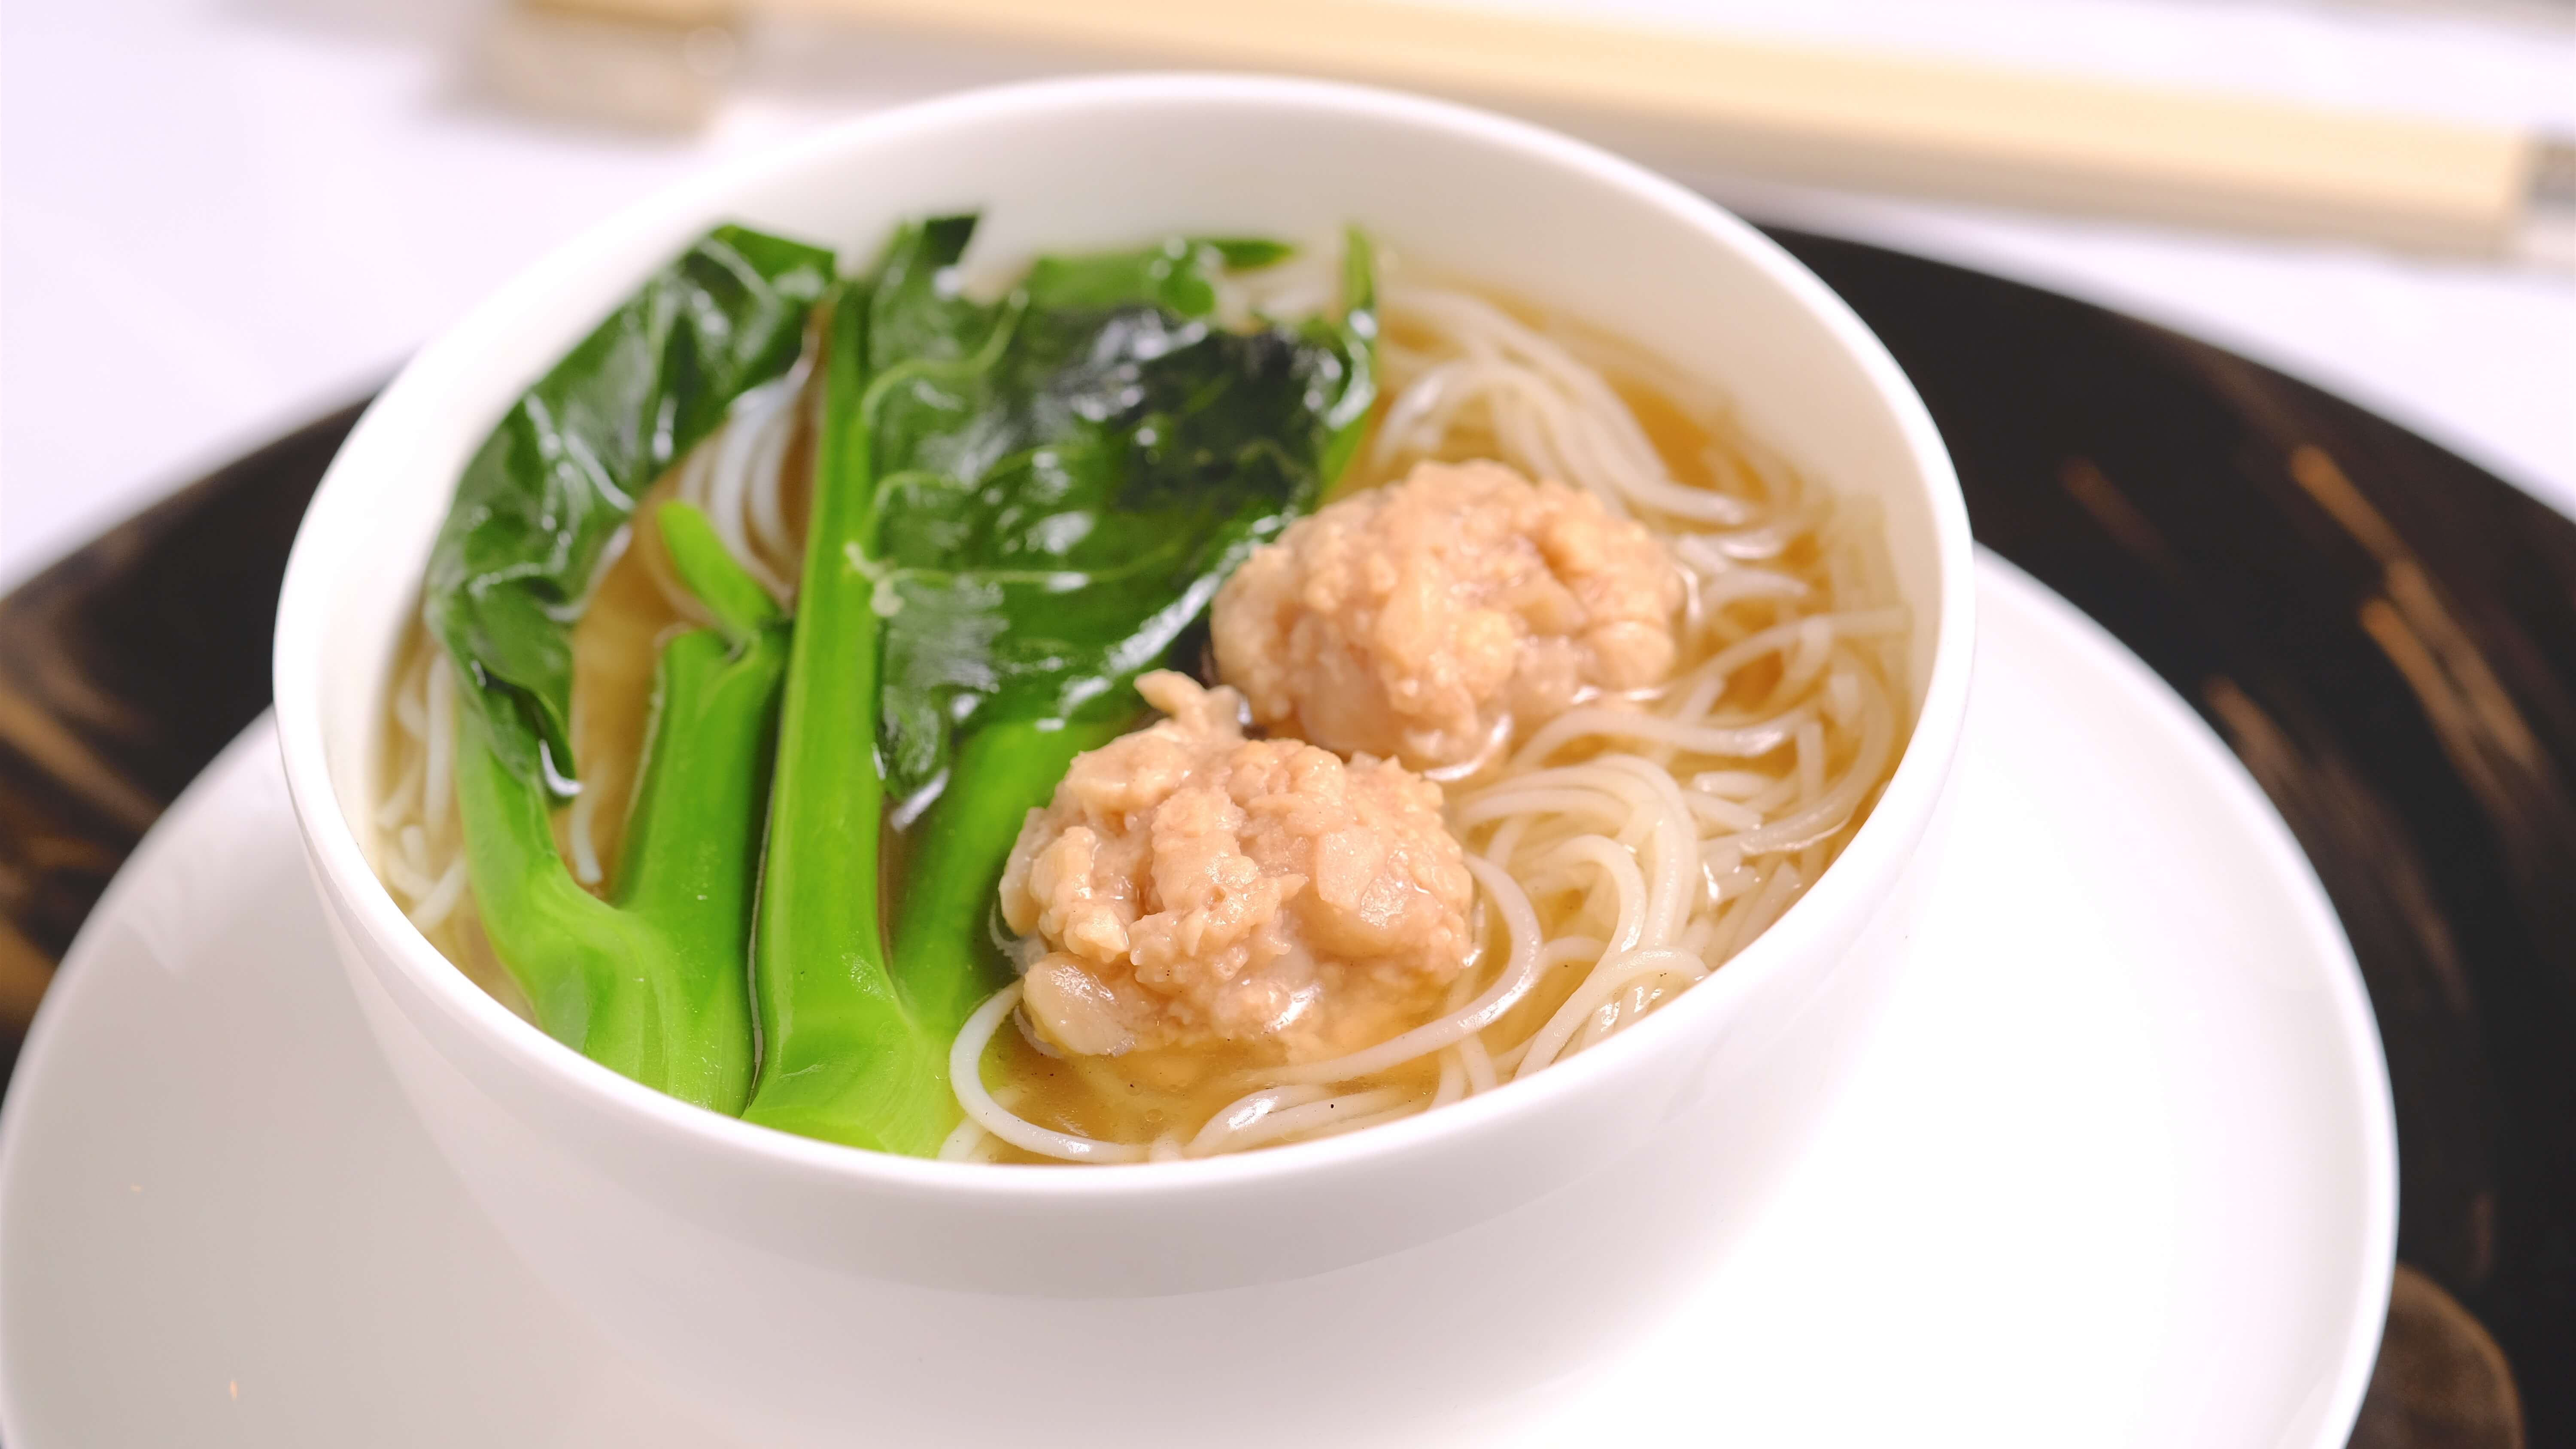 Hong Kong's Kind Kitchen Launches Vegan Right Treat Omnipork Menu